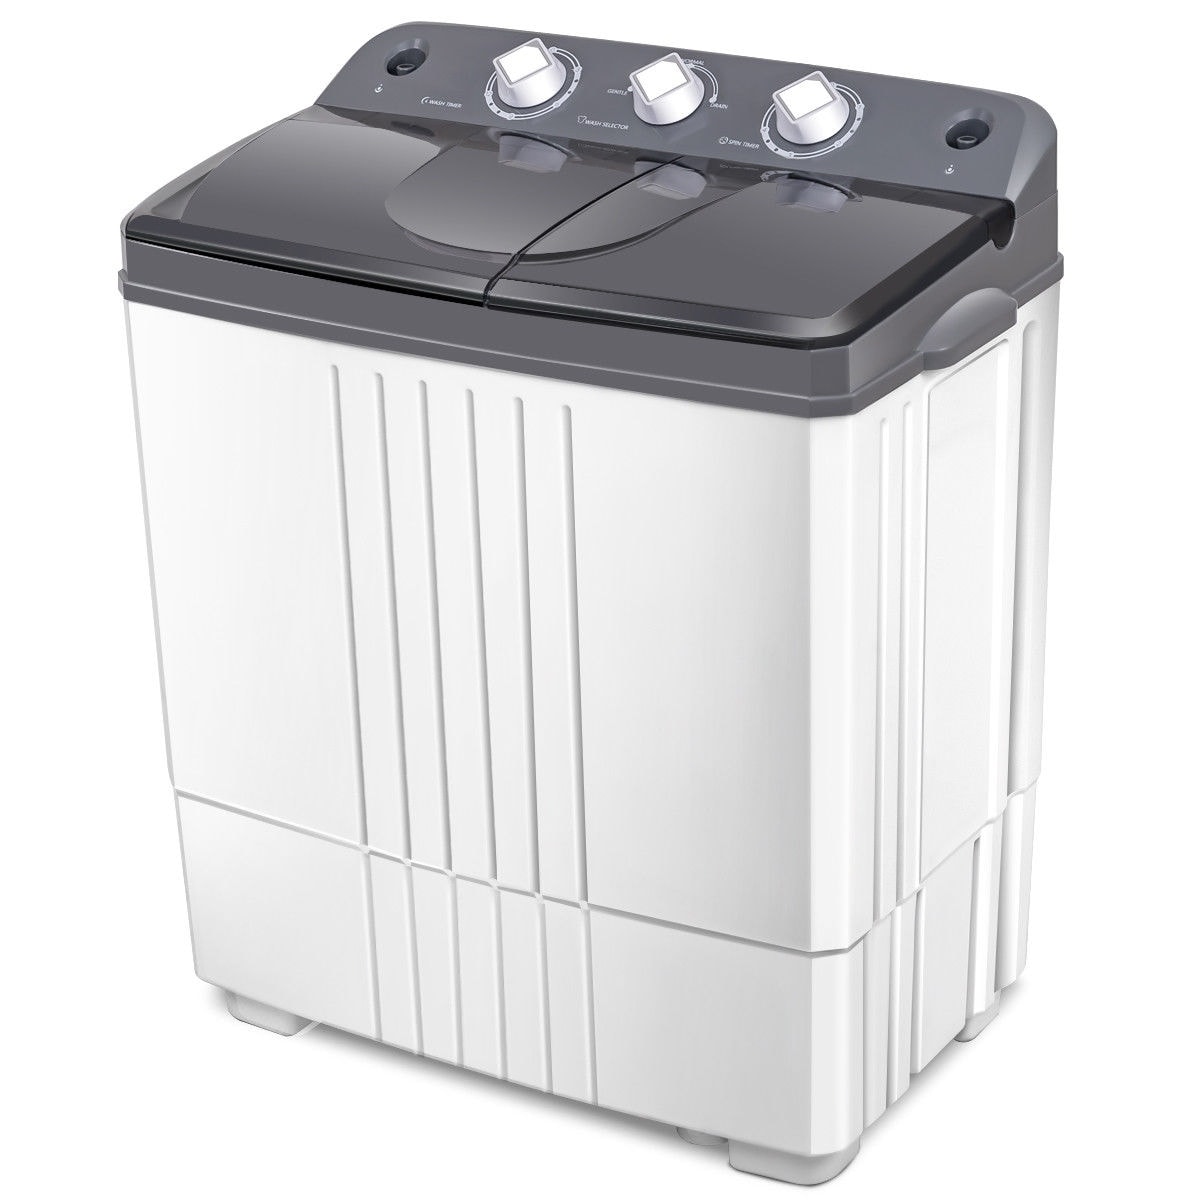 Gymax Full-Automatic Washing Machine Portable Compact Laundry